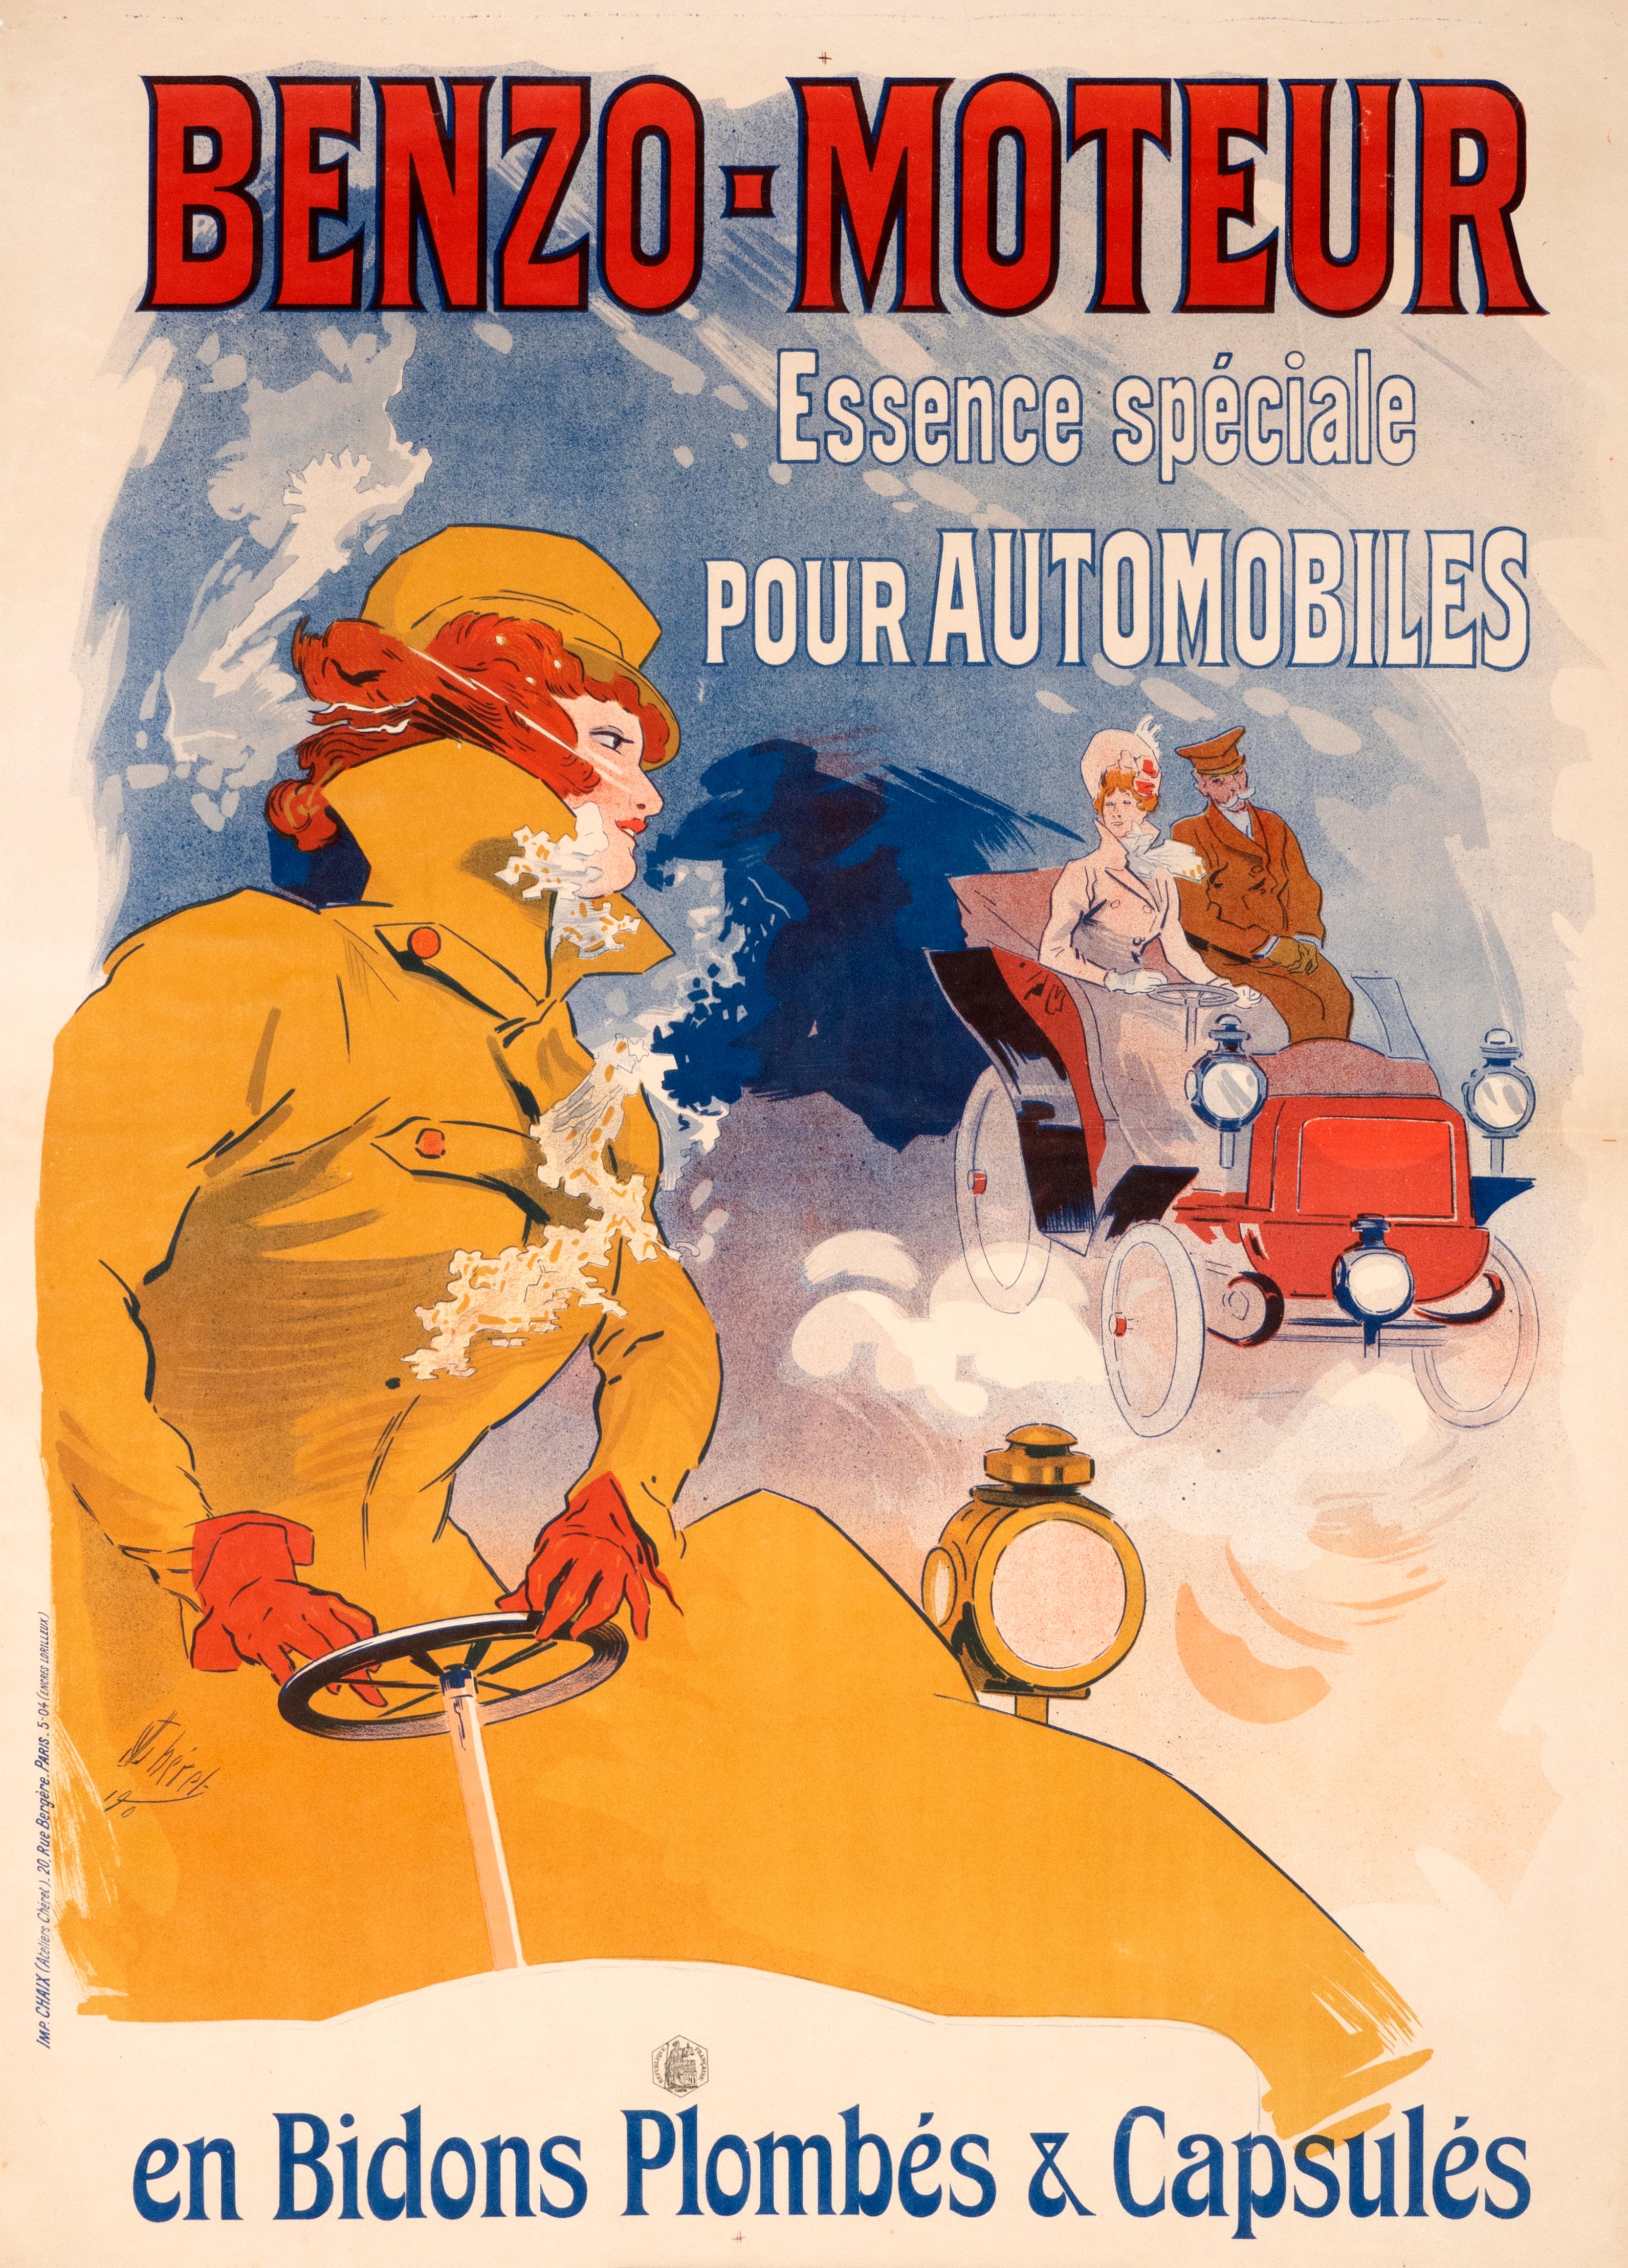 "Benzo Moteur" Original Vintage Gasoline Poster by Jules Cheret - Print by Jules Chéret